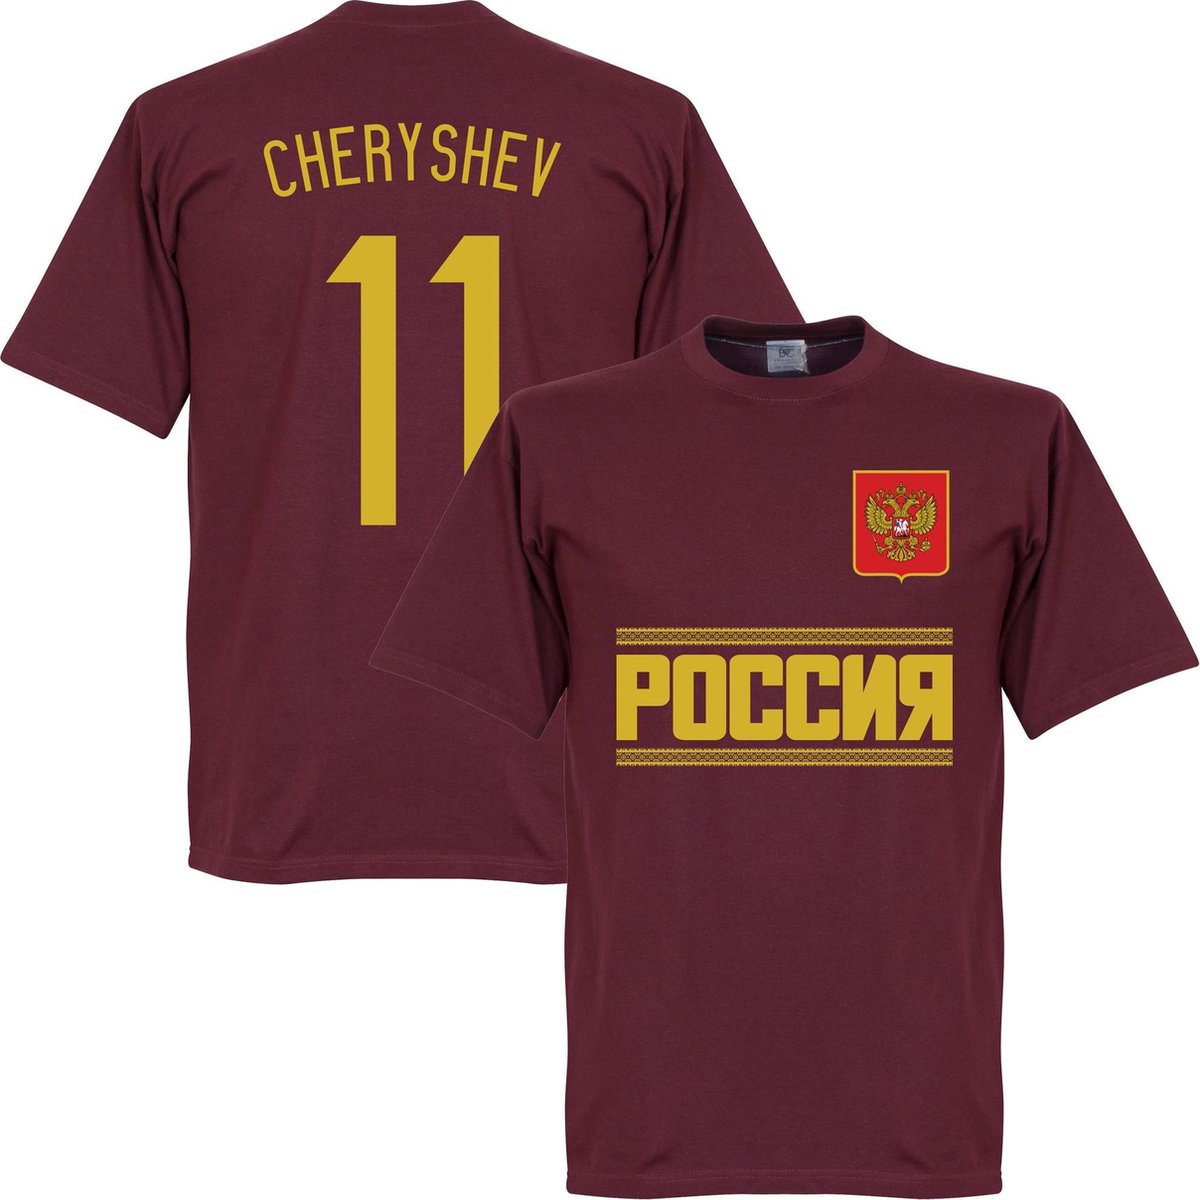 Rusland Cheryshev Team T-Shirt - XXL